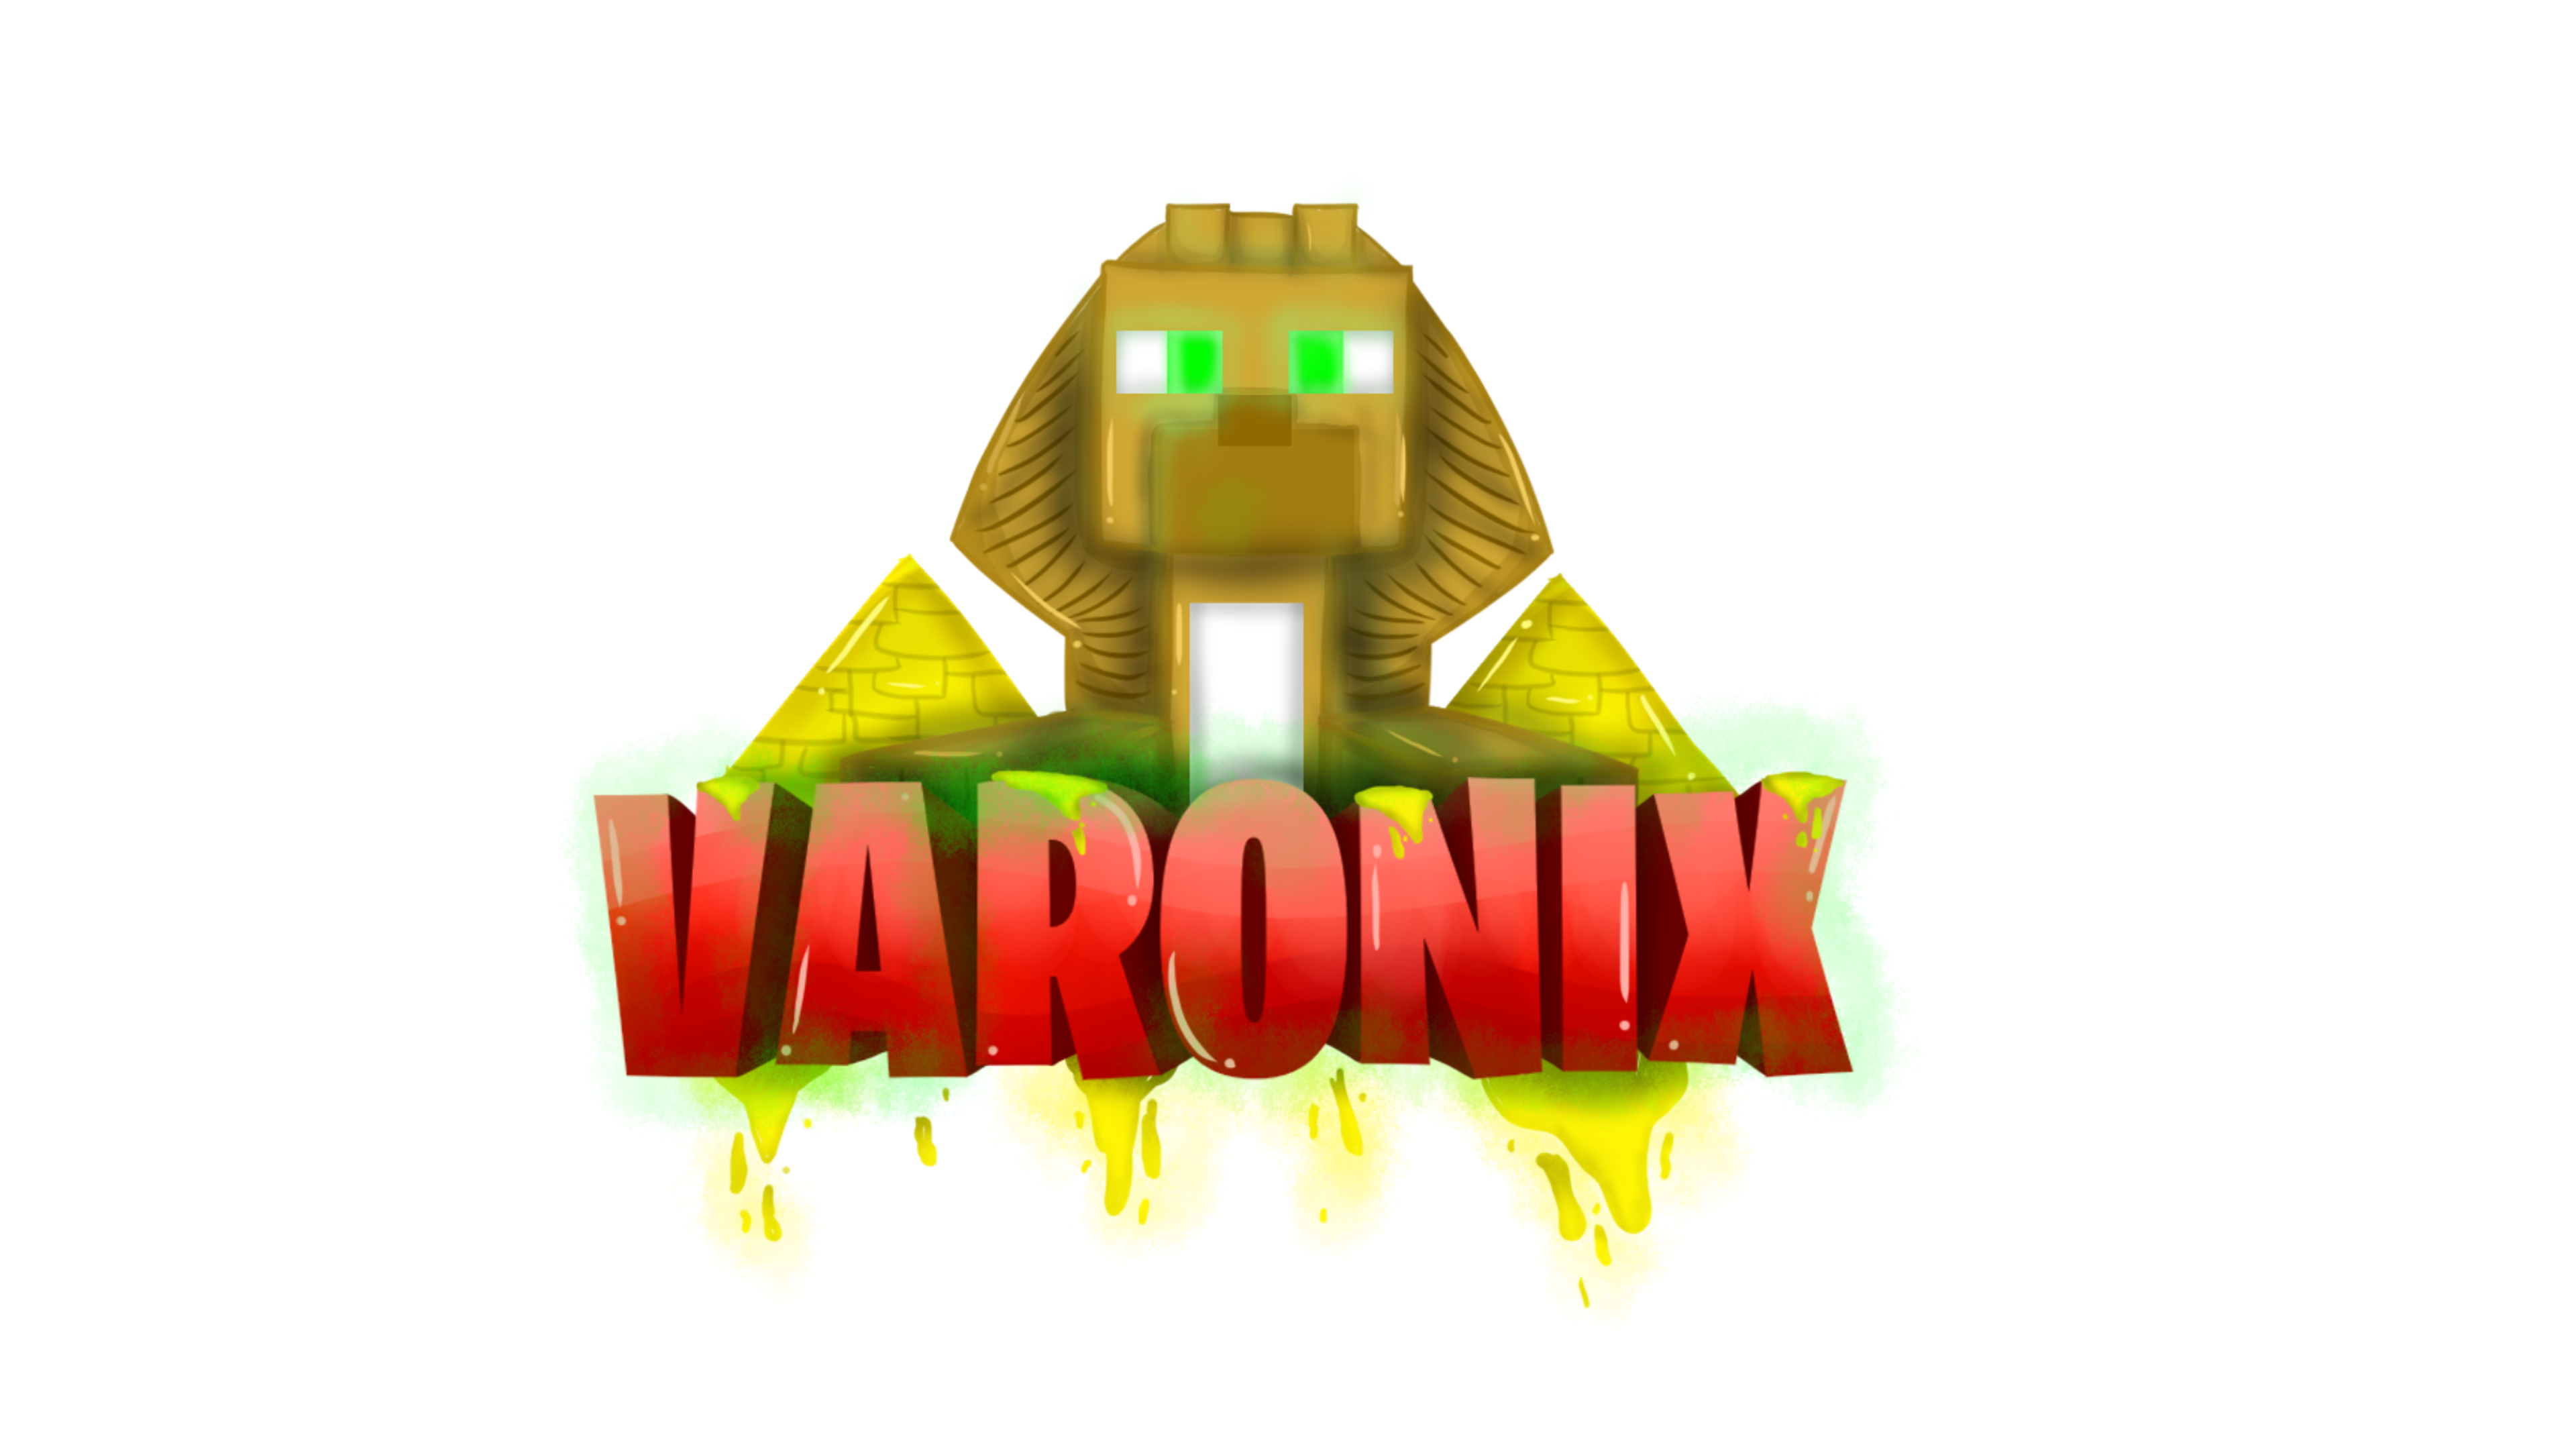 Varonix PvP Faction